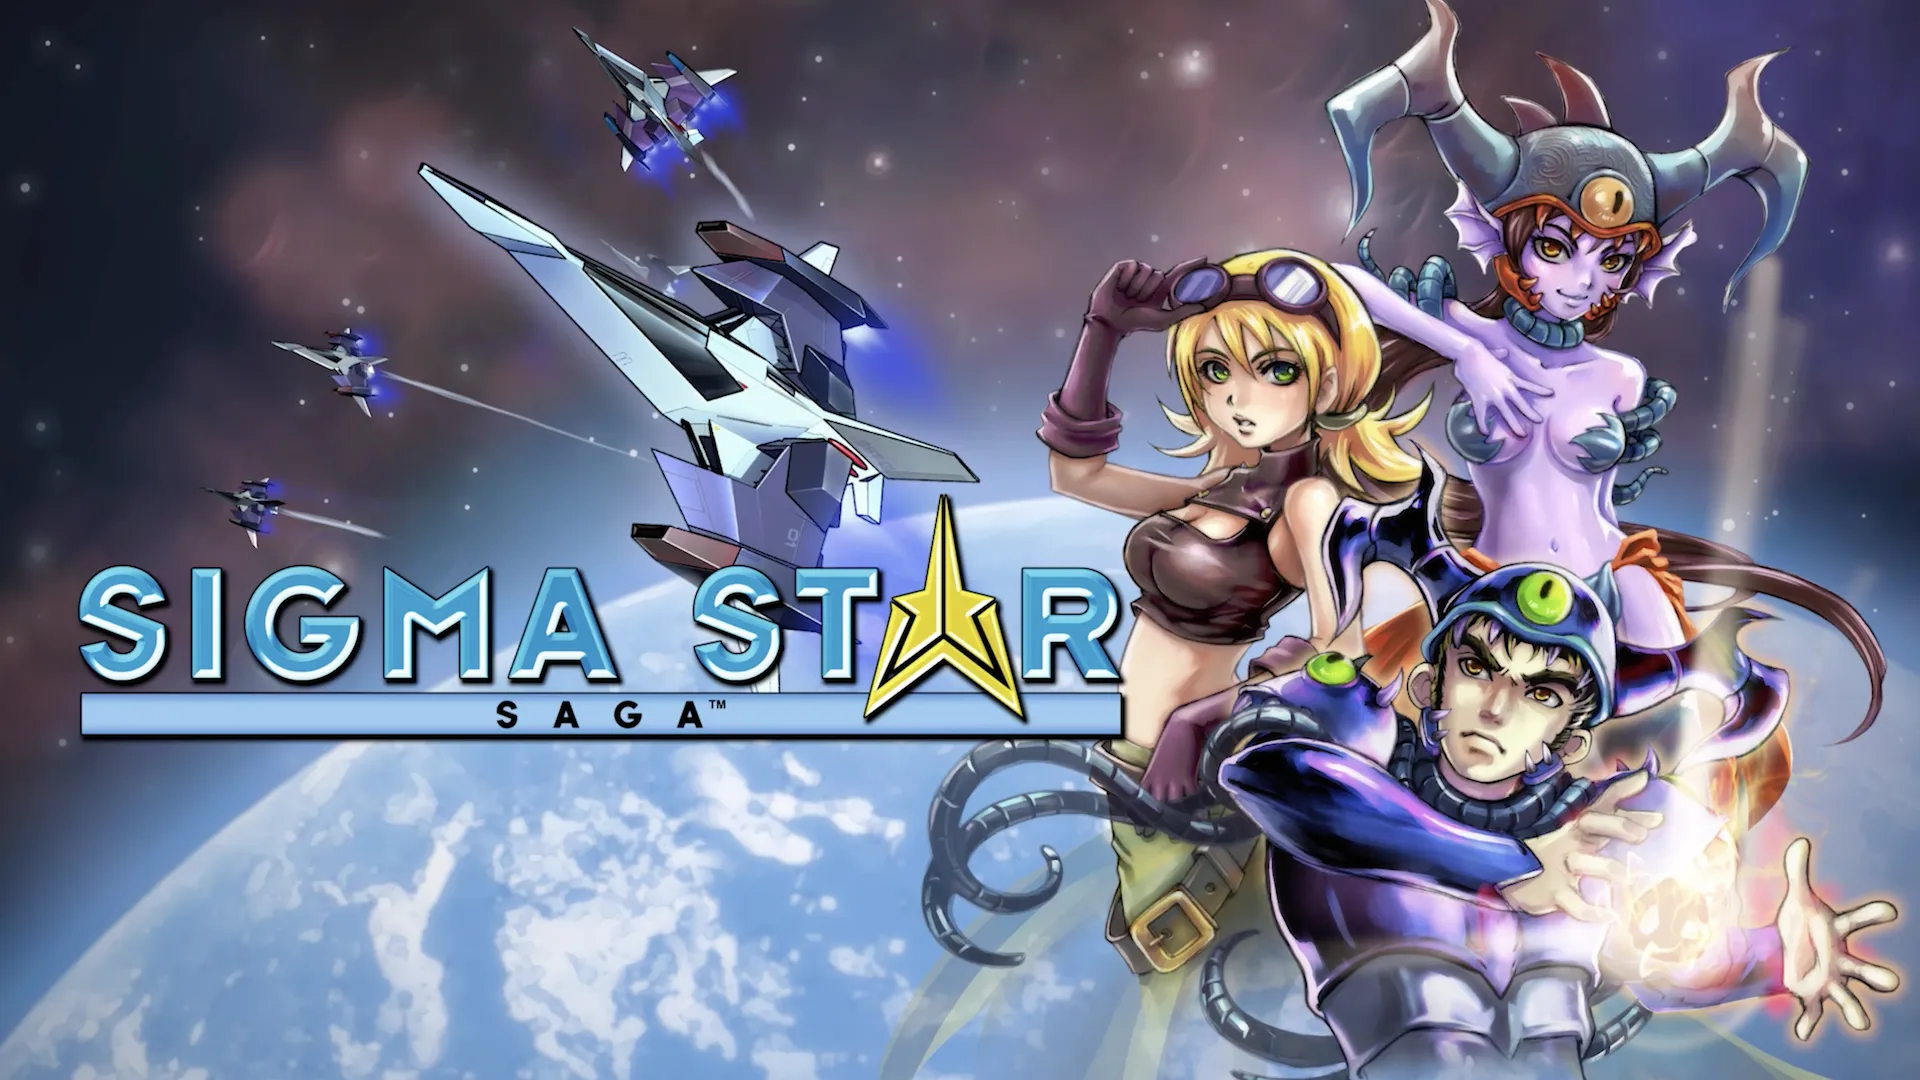 WayForward announces sci-fi adventure game Sigma Star Saga, to be released next year